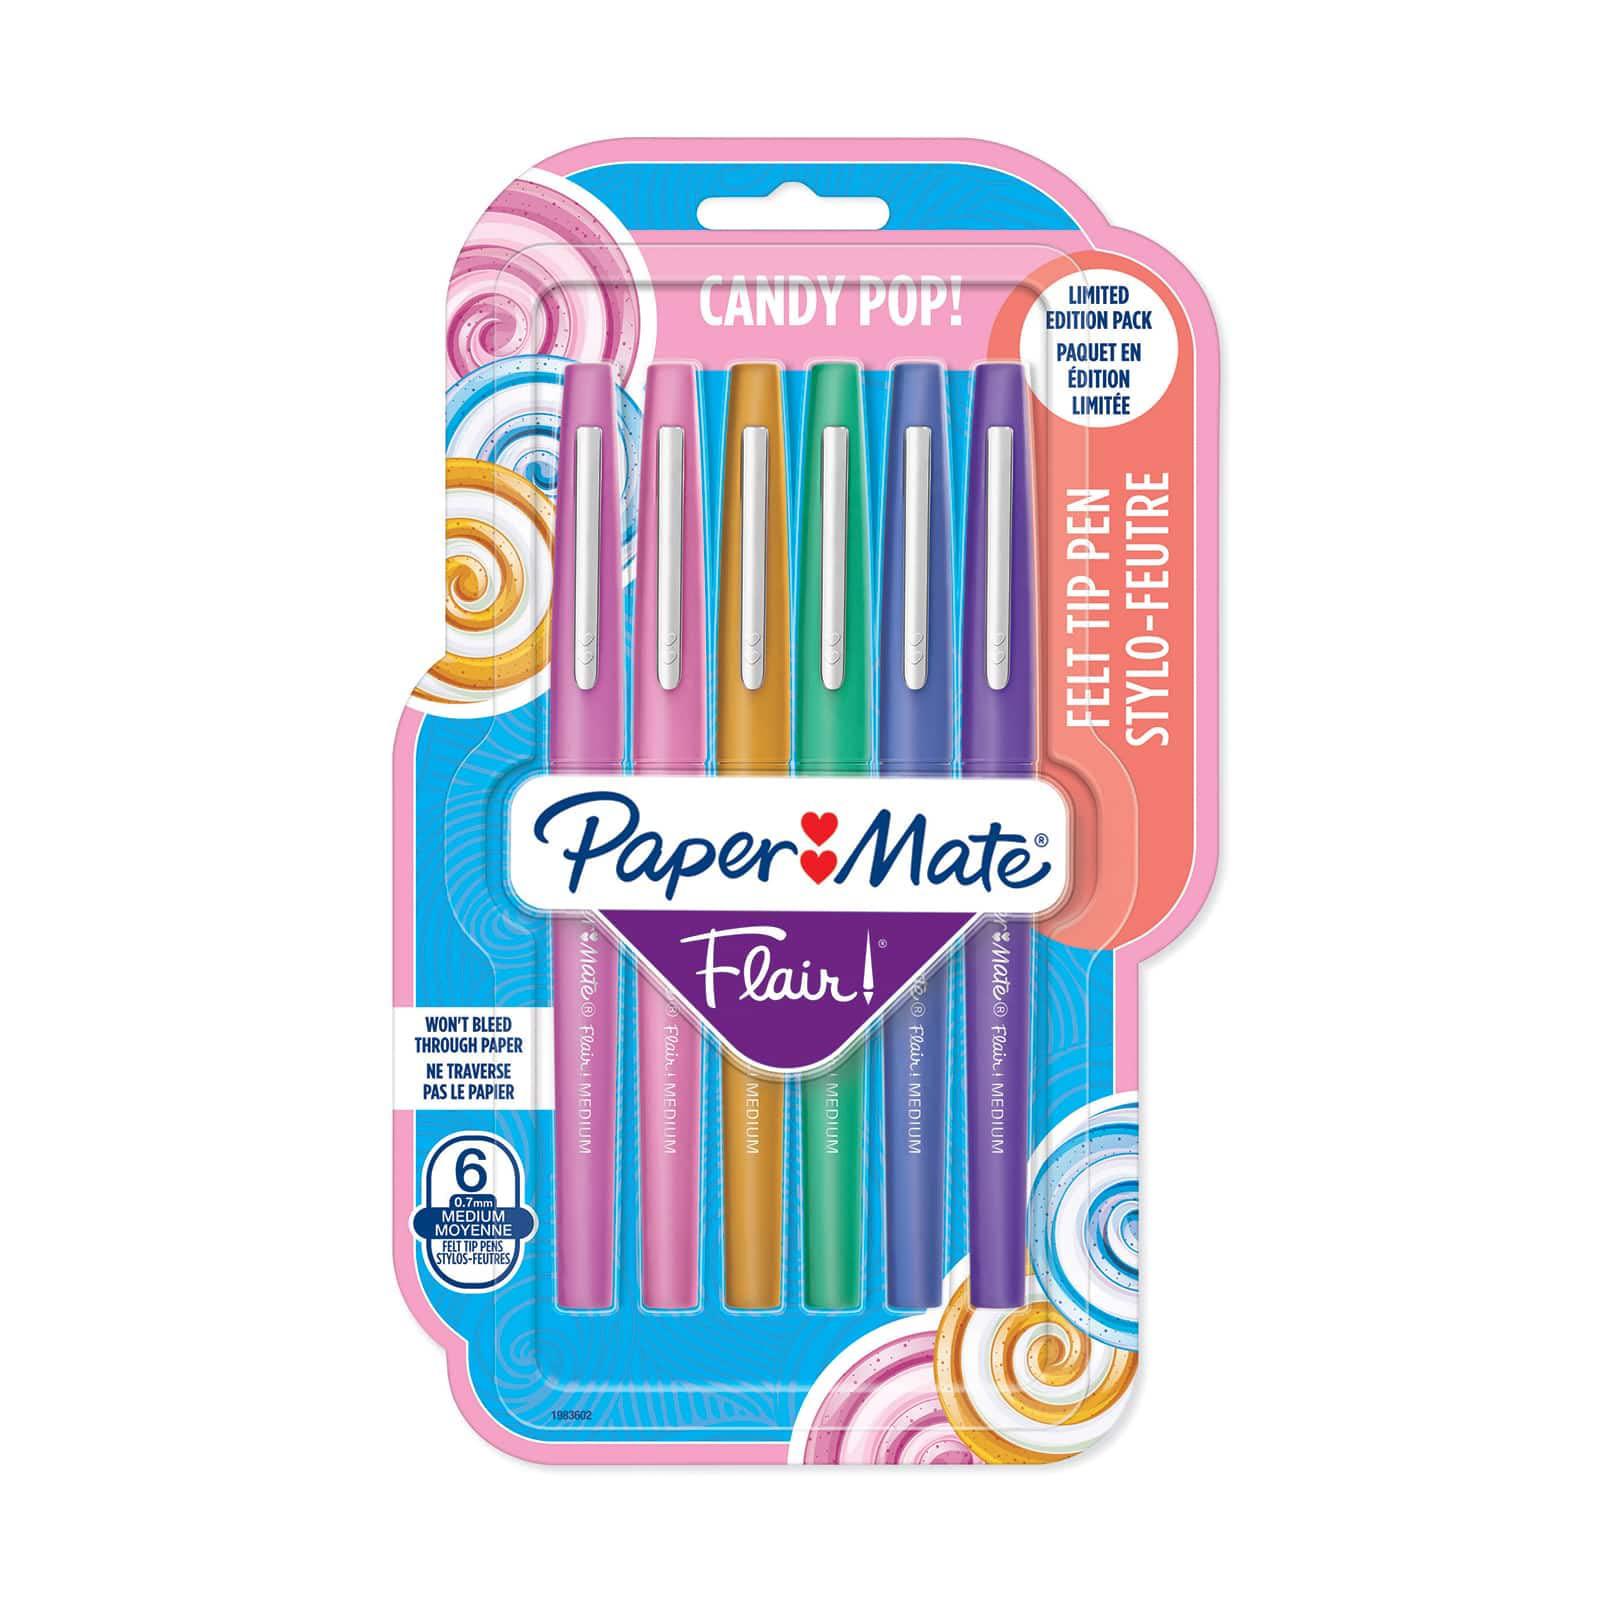 Paper-Mate 12 packs: 6 ct. (72 total) paper mate flair felt tip candy pop pen set